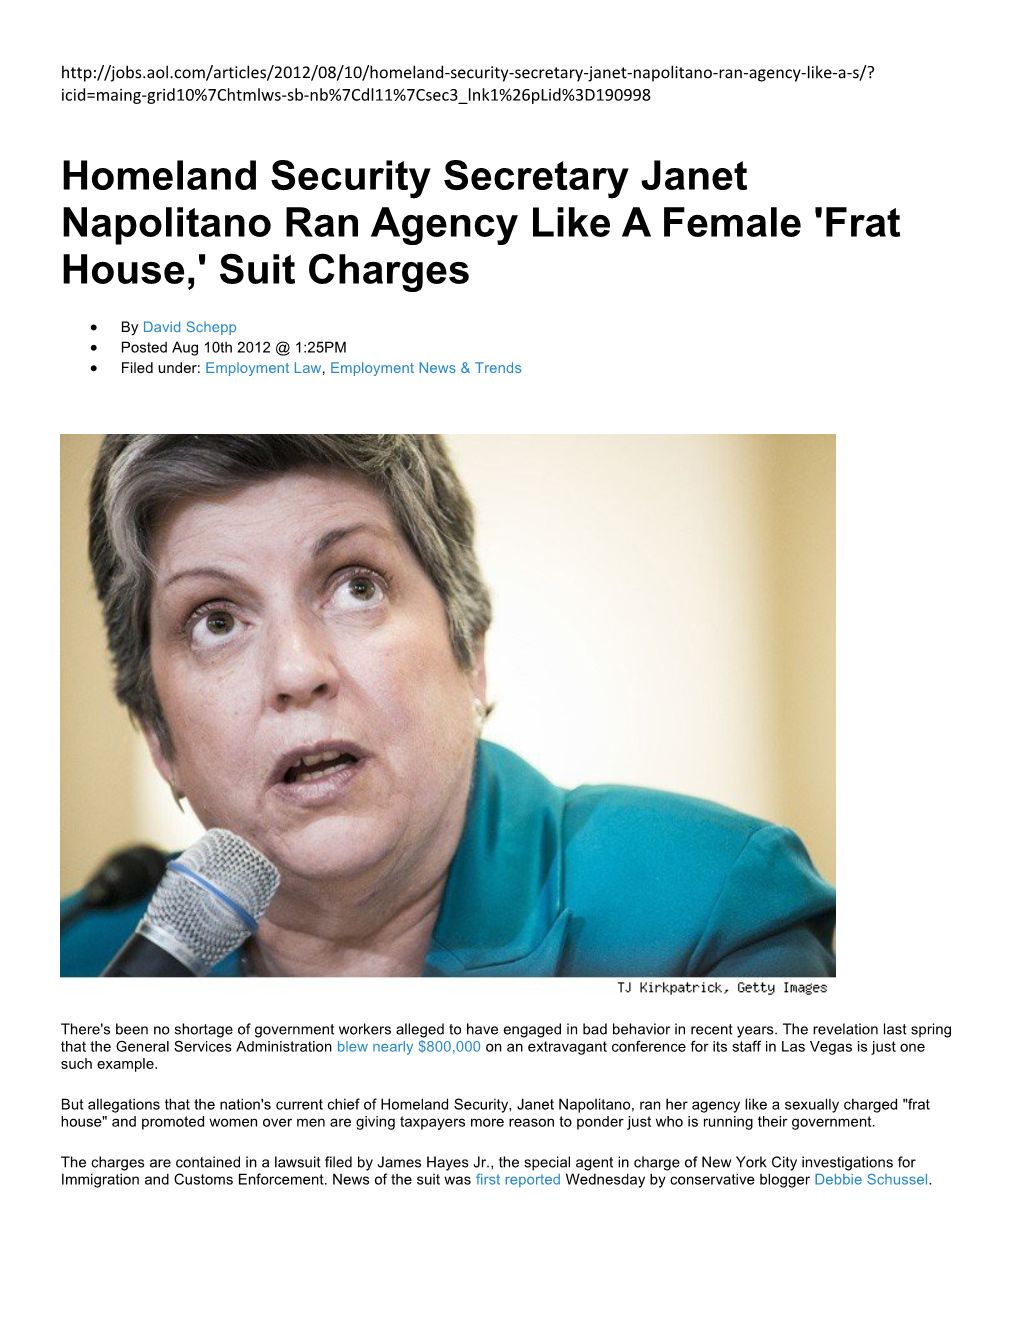 Homeland Security Secretary Janet Napolitano Ran Agency Like a Female 'Frat House,' Suit